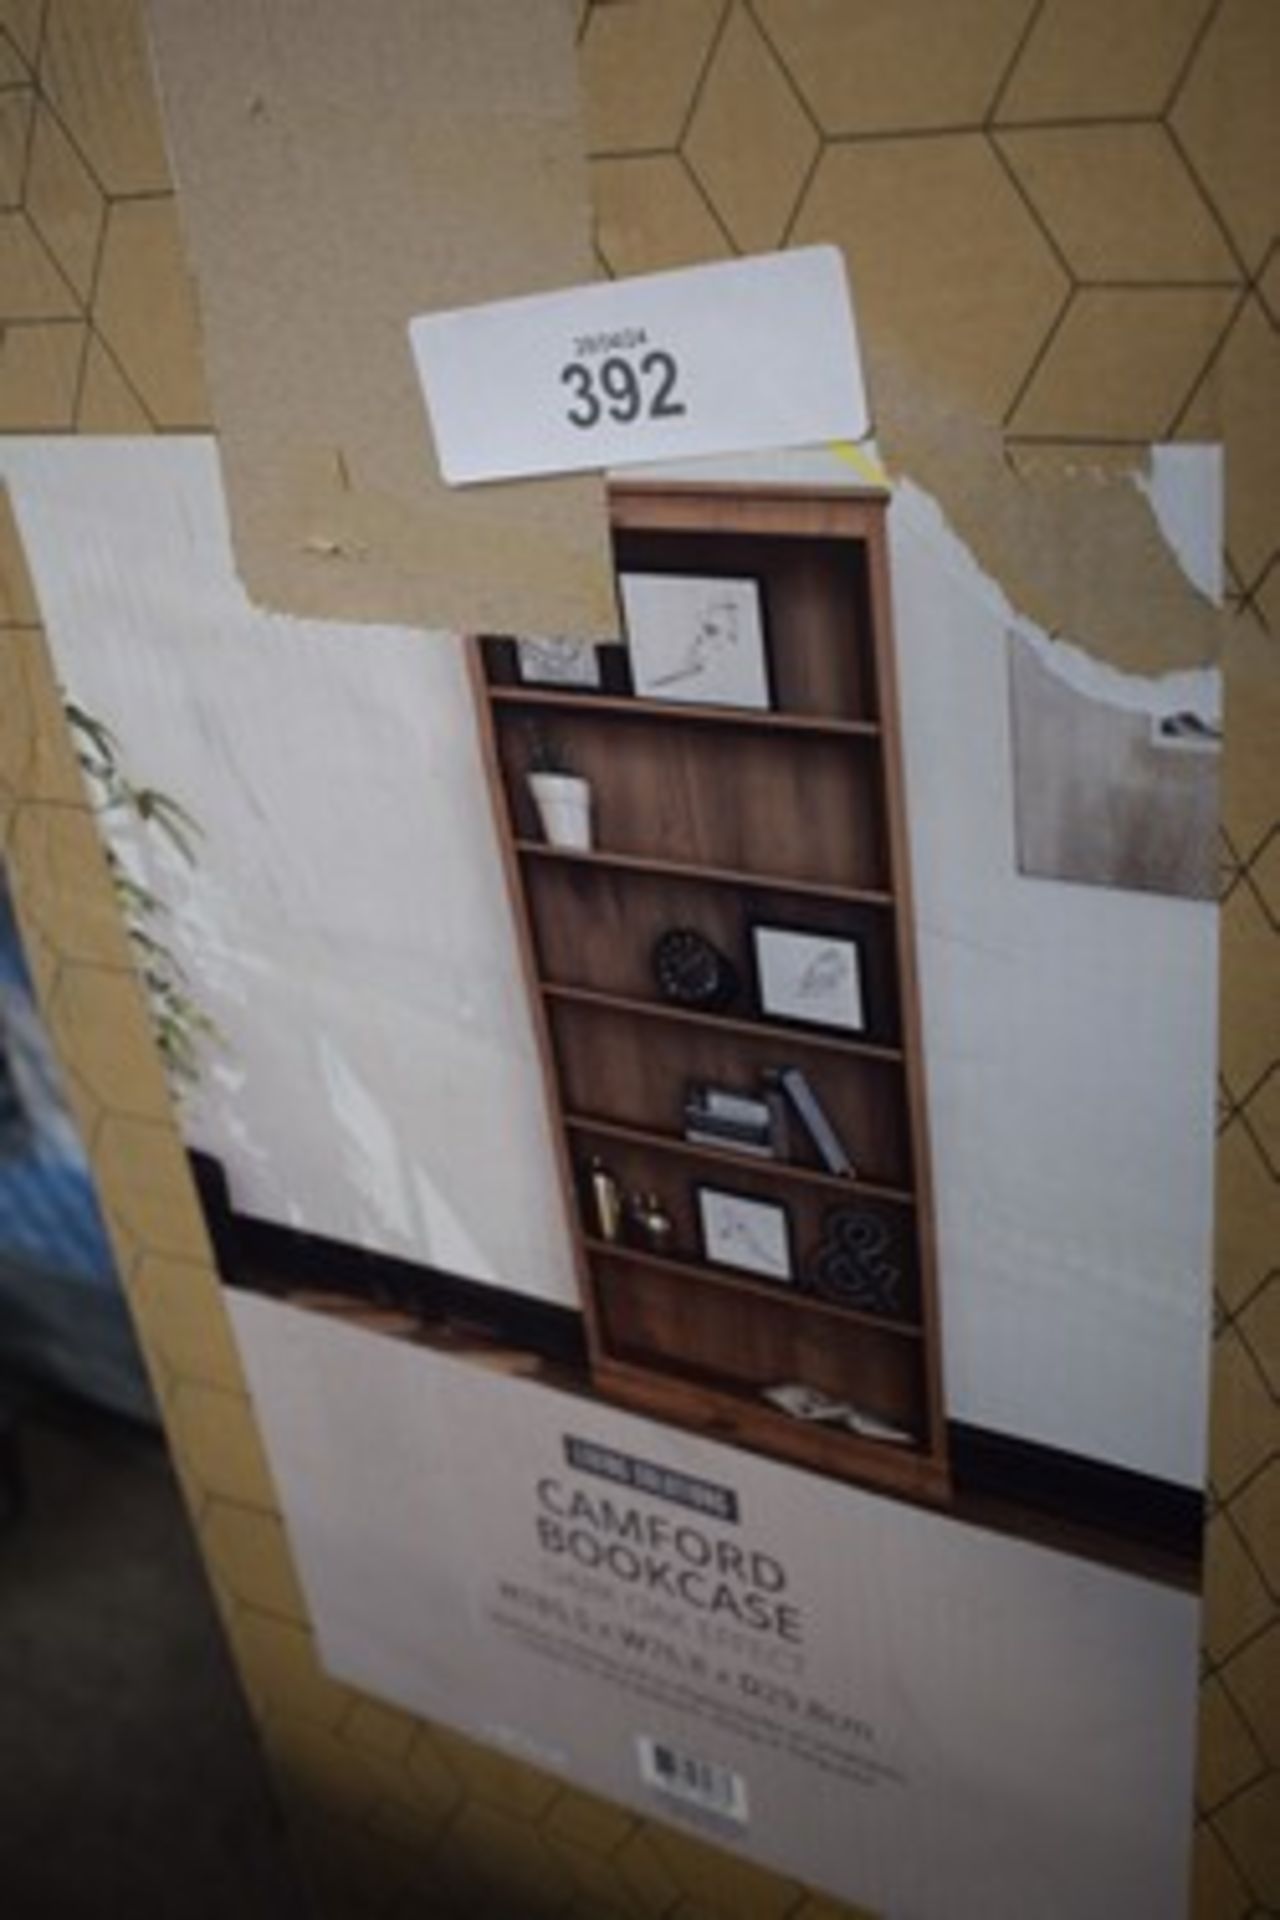 1 x Living Solutions, Canford dark oak effect bookcase, size 80.5 x 6.8 x 29.8cm - new in box (FS6)